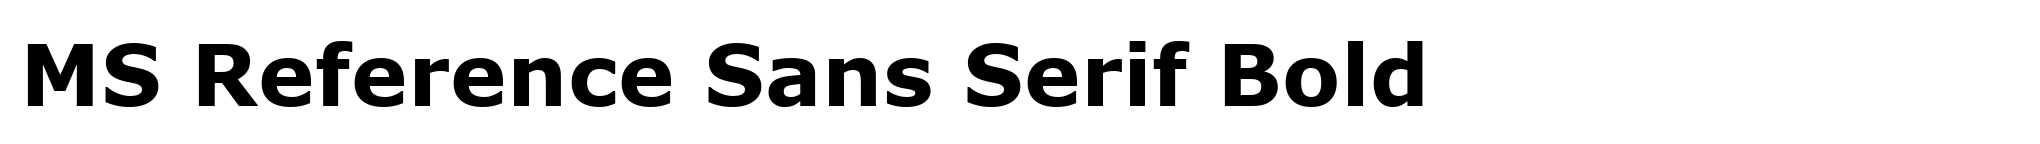 MS Reference Sans Serif Bold image